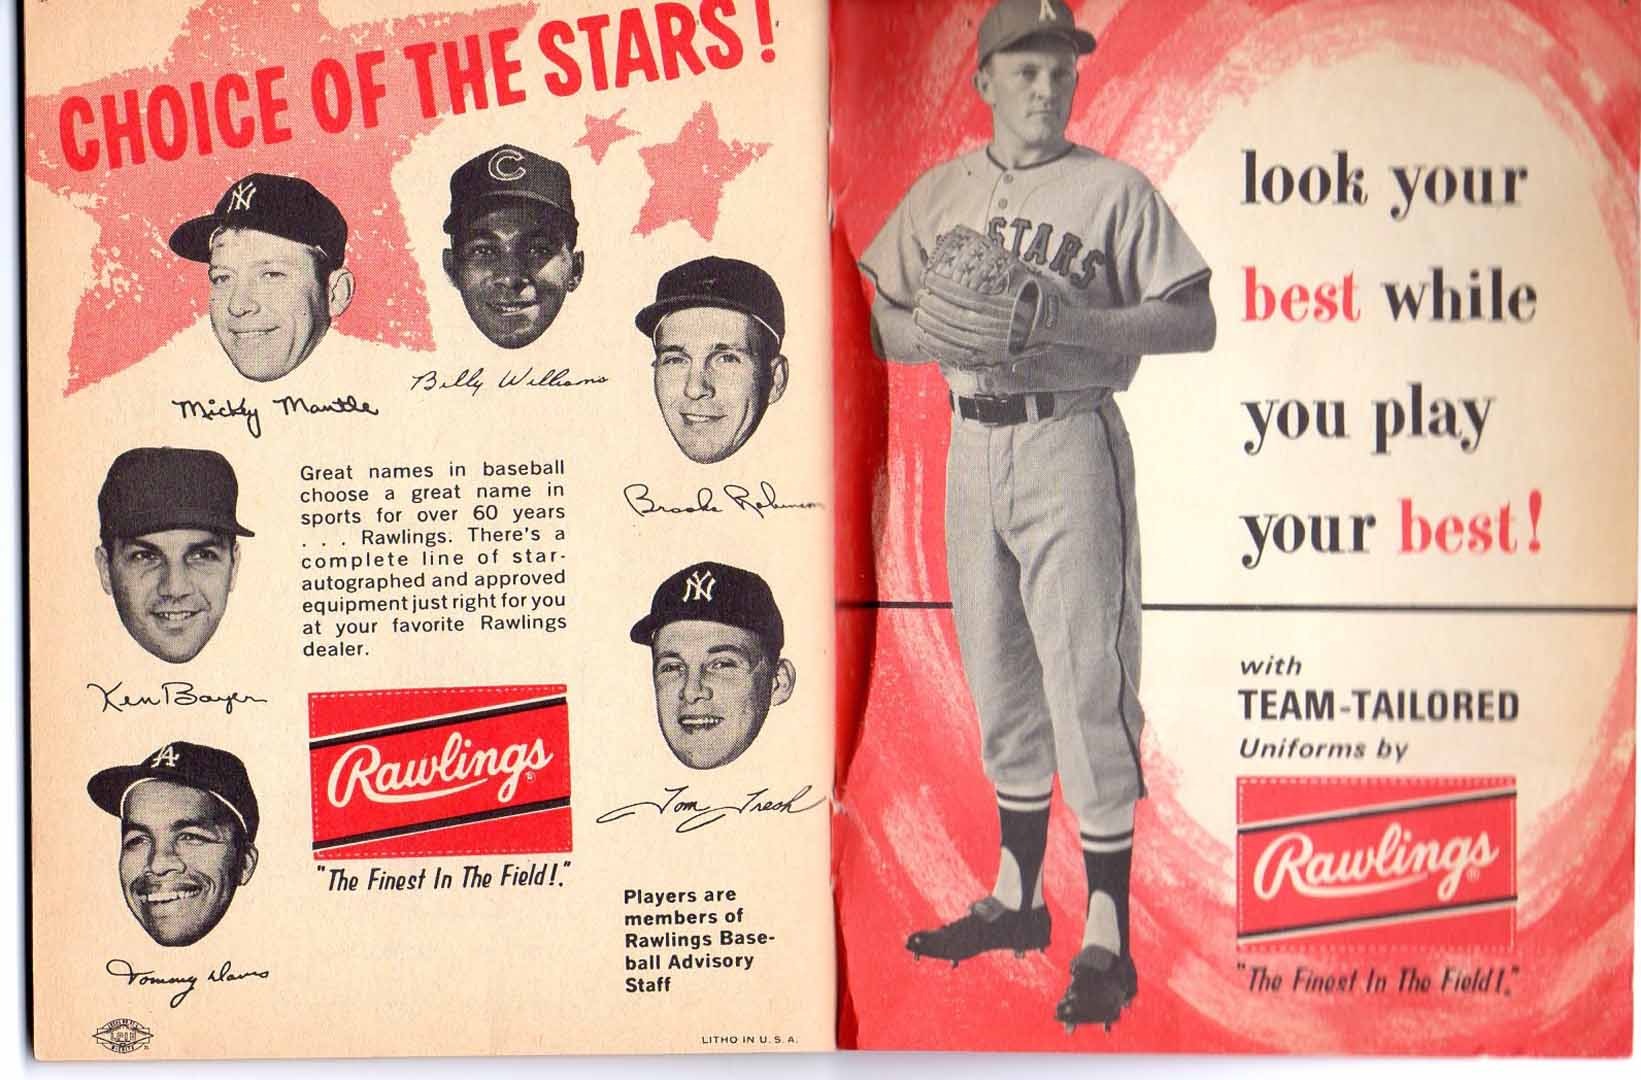 1966 baseball rules